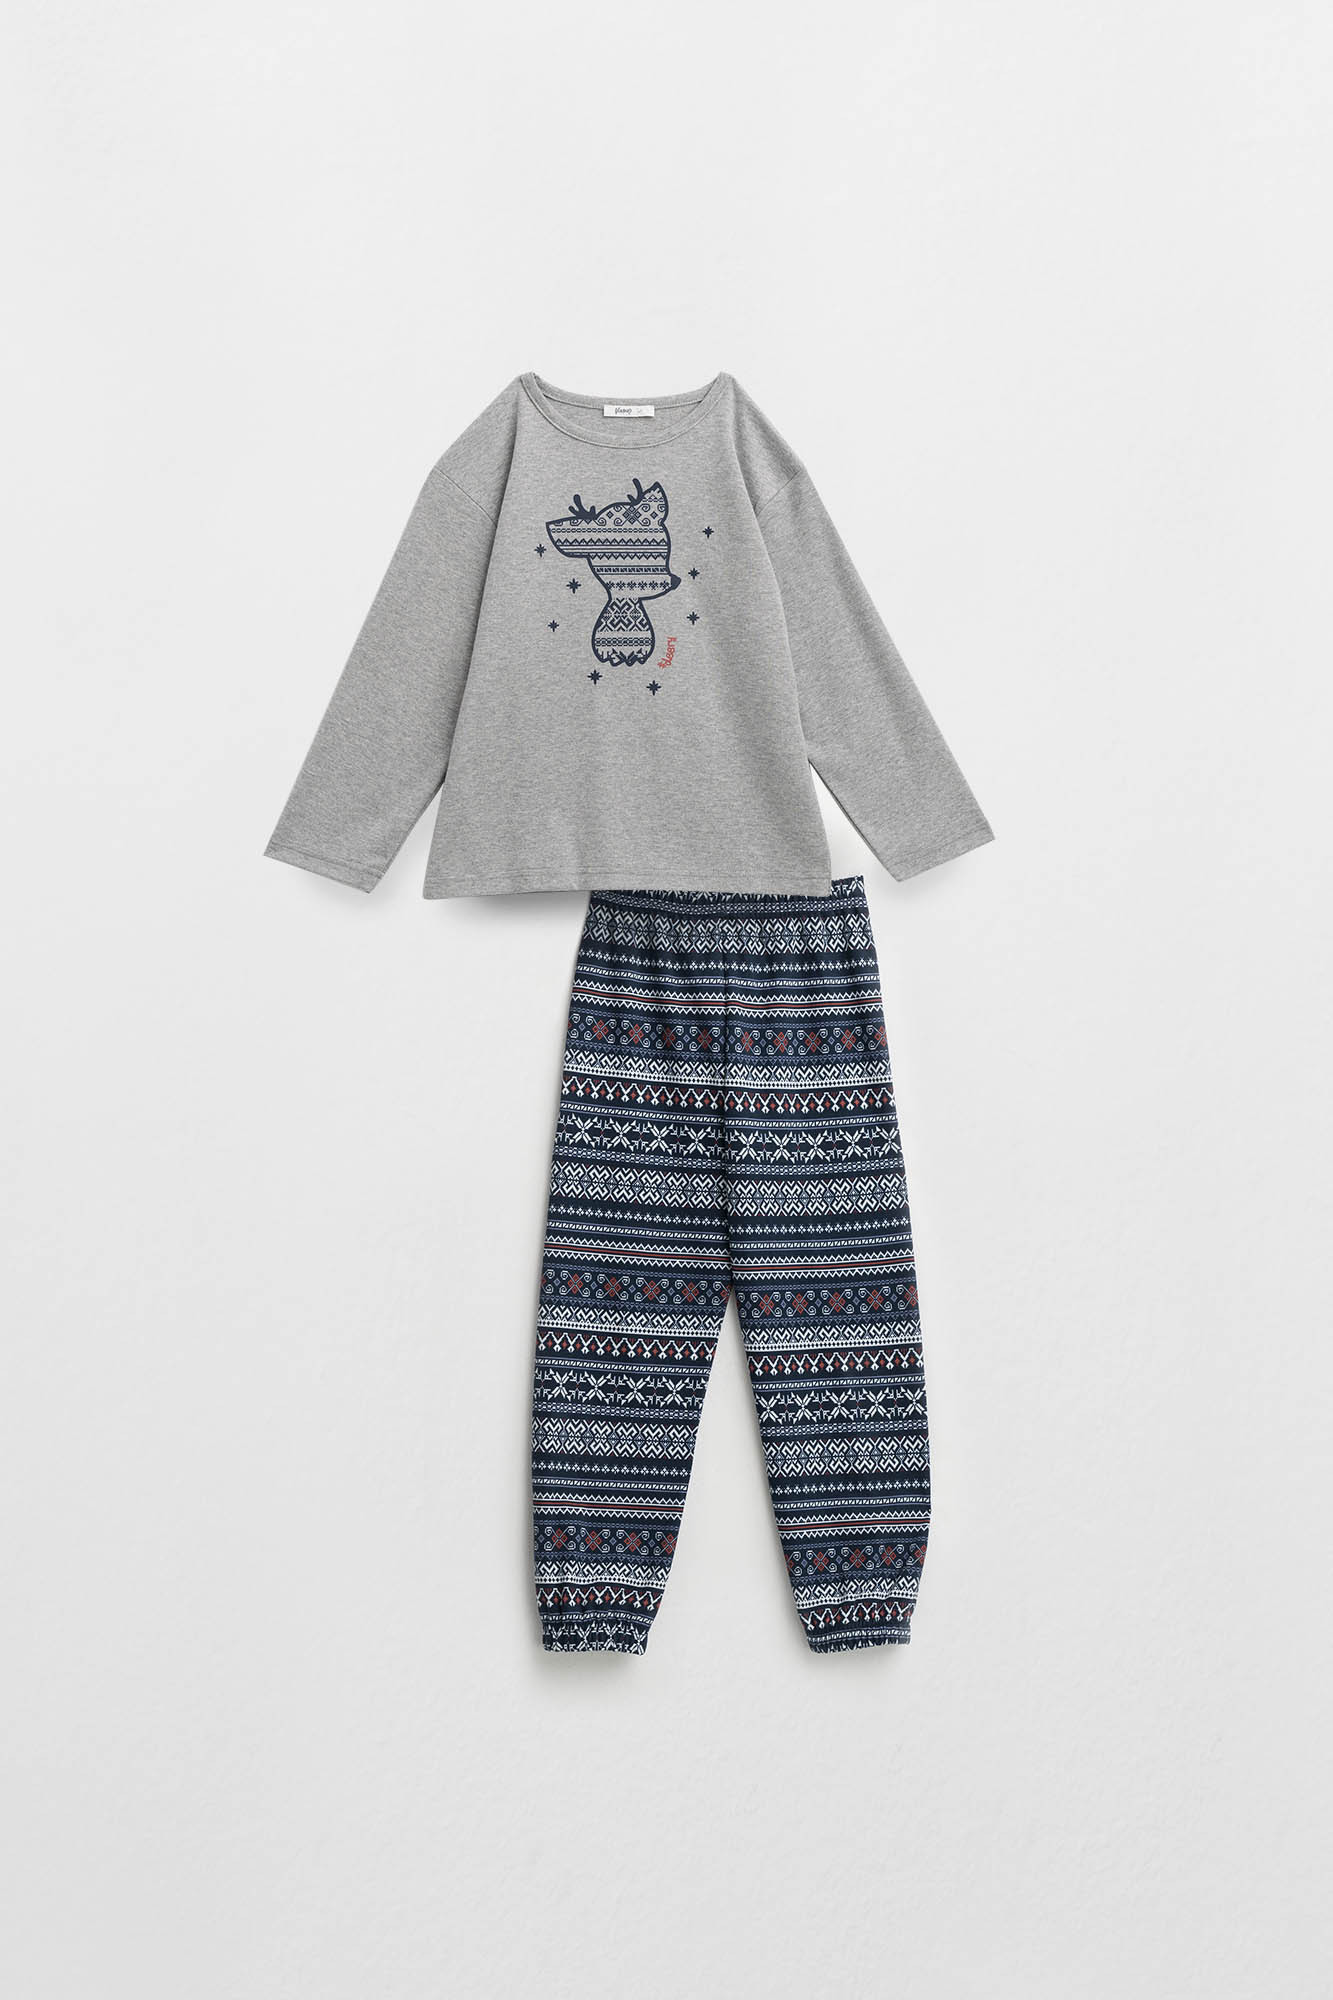 Vamp - Dvoudílné dětské pyžamo - Darby 17576 - Vamp gray melange 4